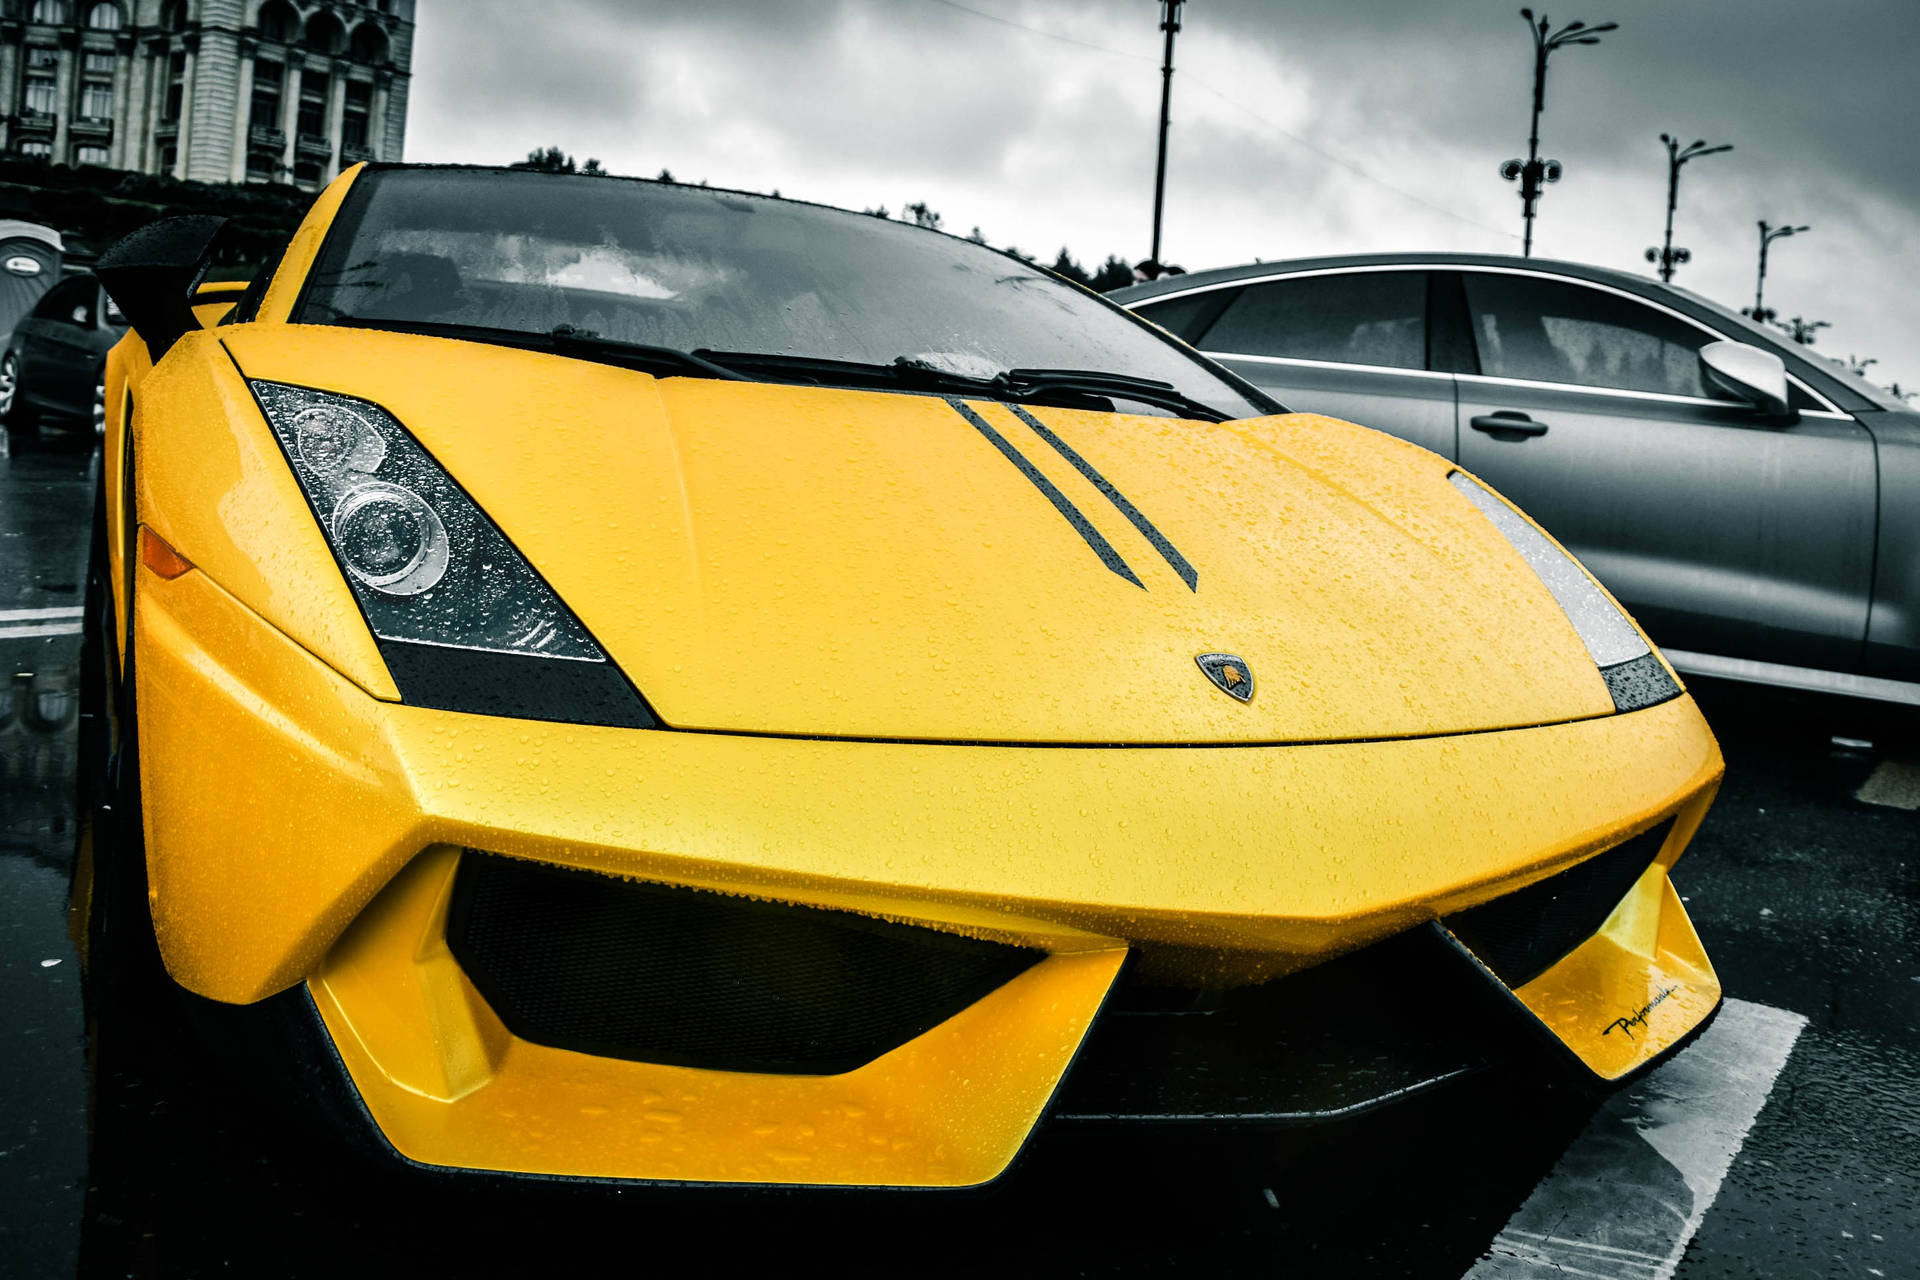 “Striking Yellow Lamborghini Gallardo on a Rainy Day” Wallpaper